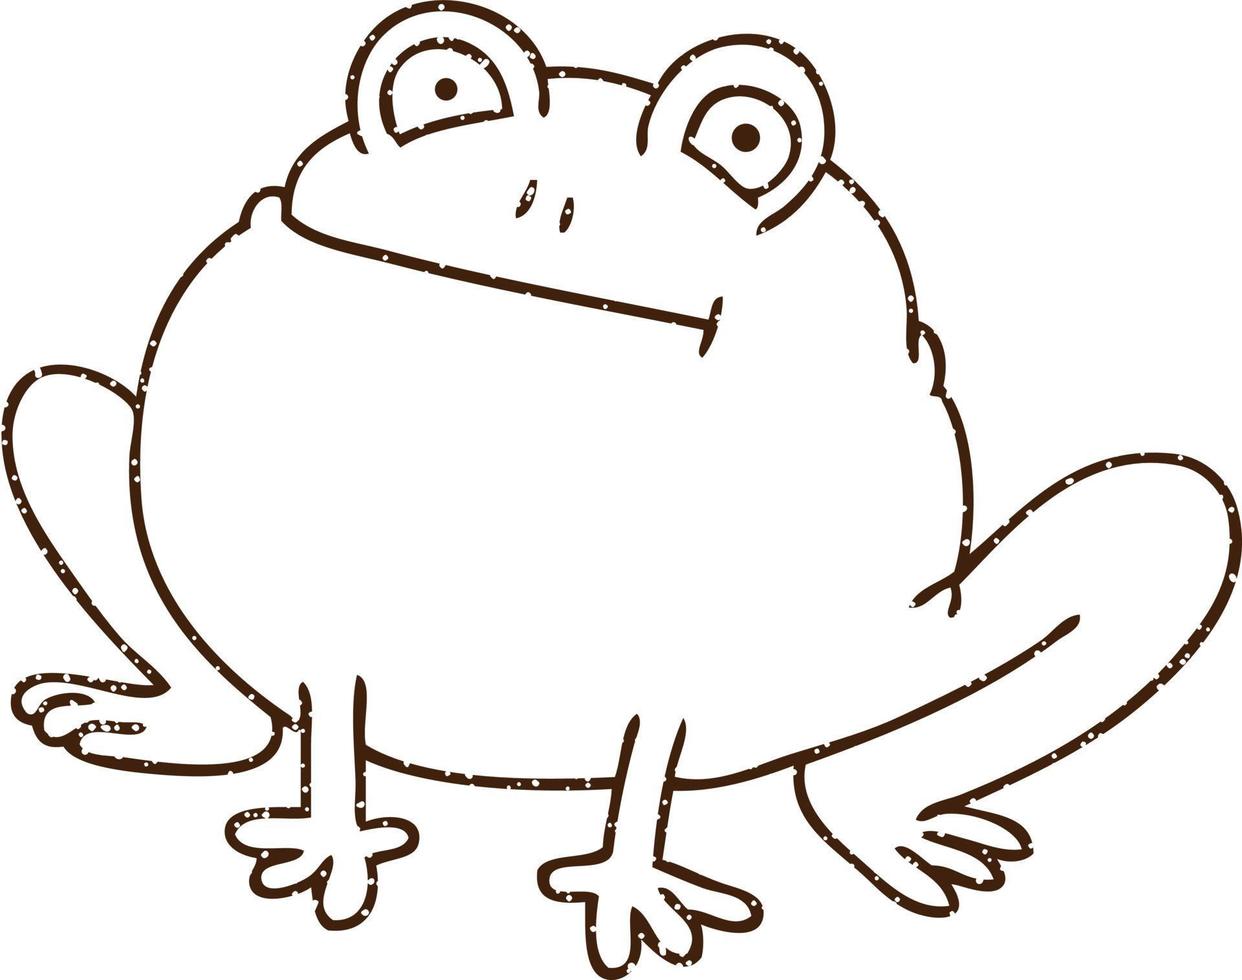 Smug Toad Charcoal Drawing vector